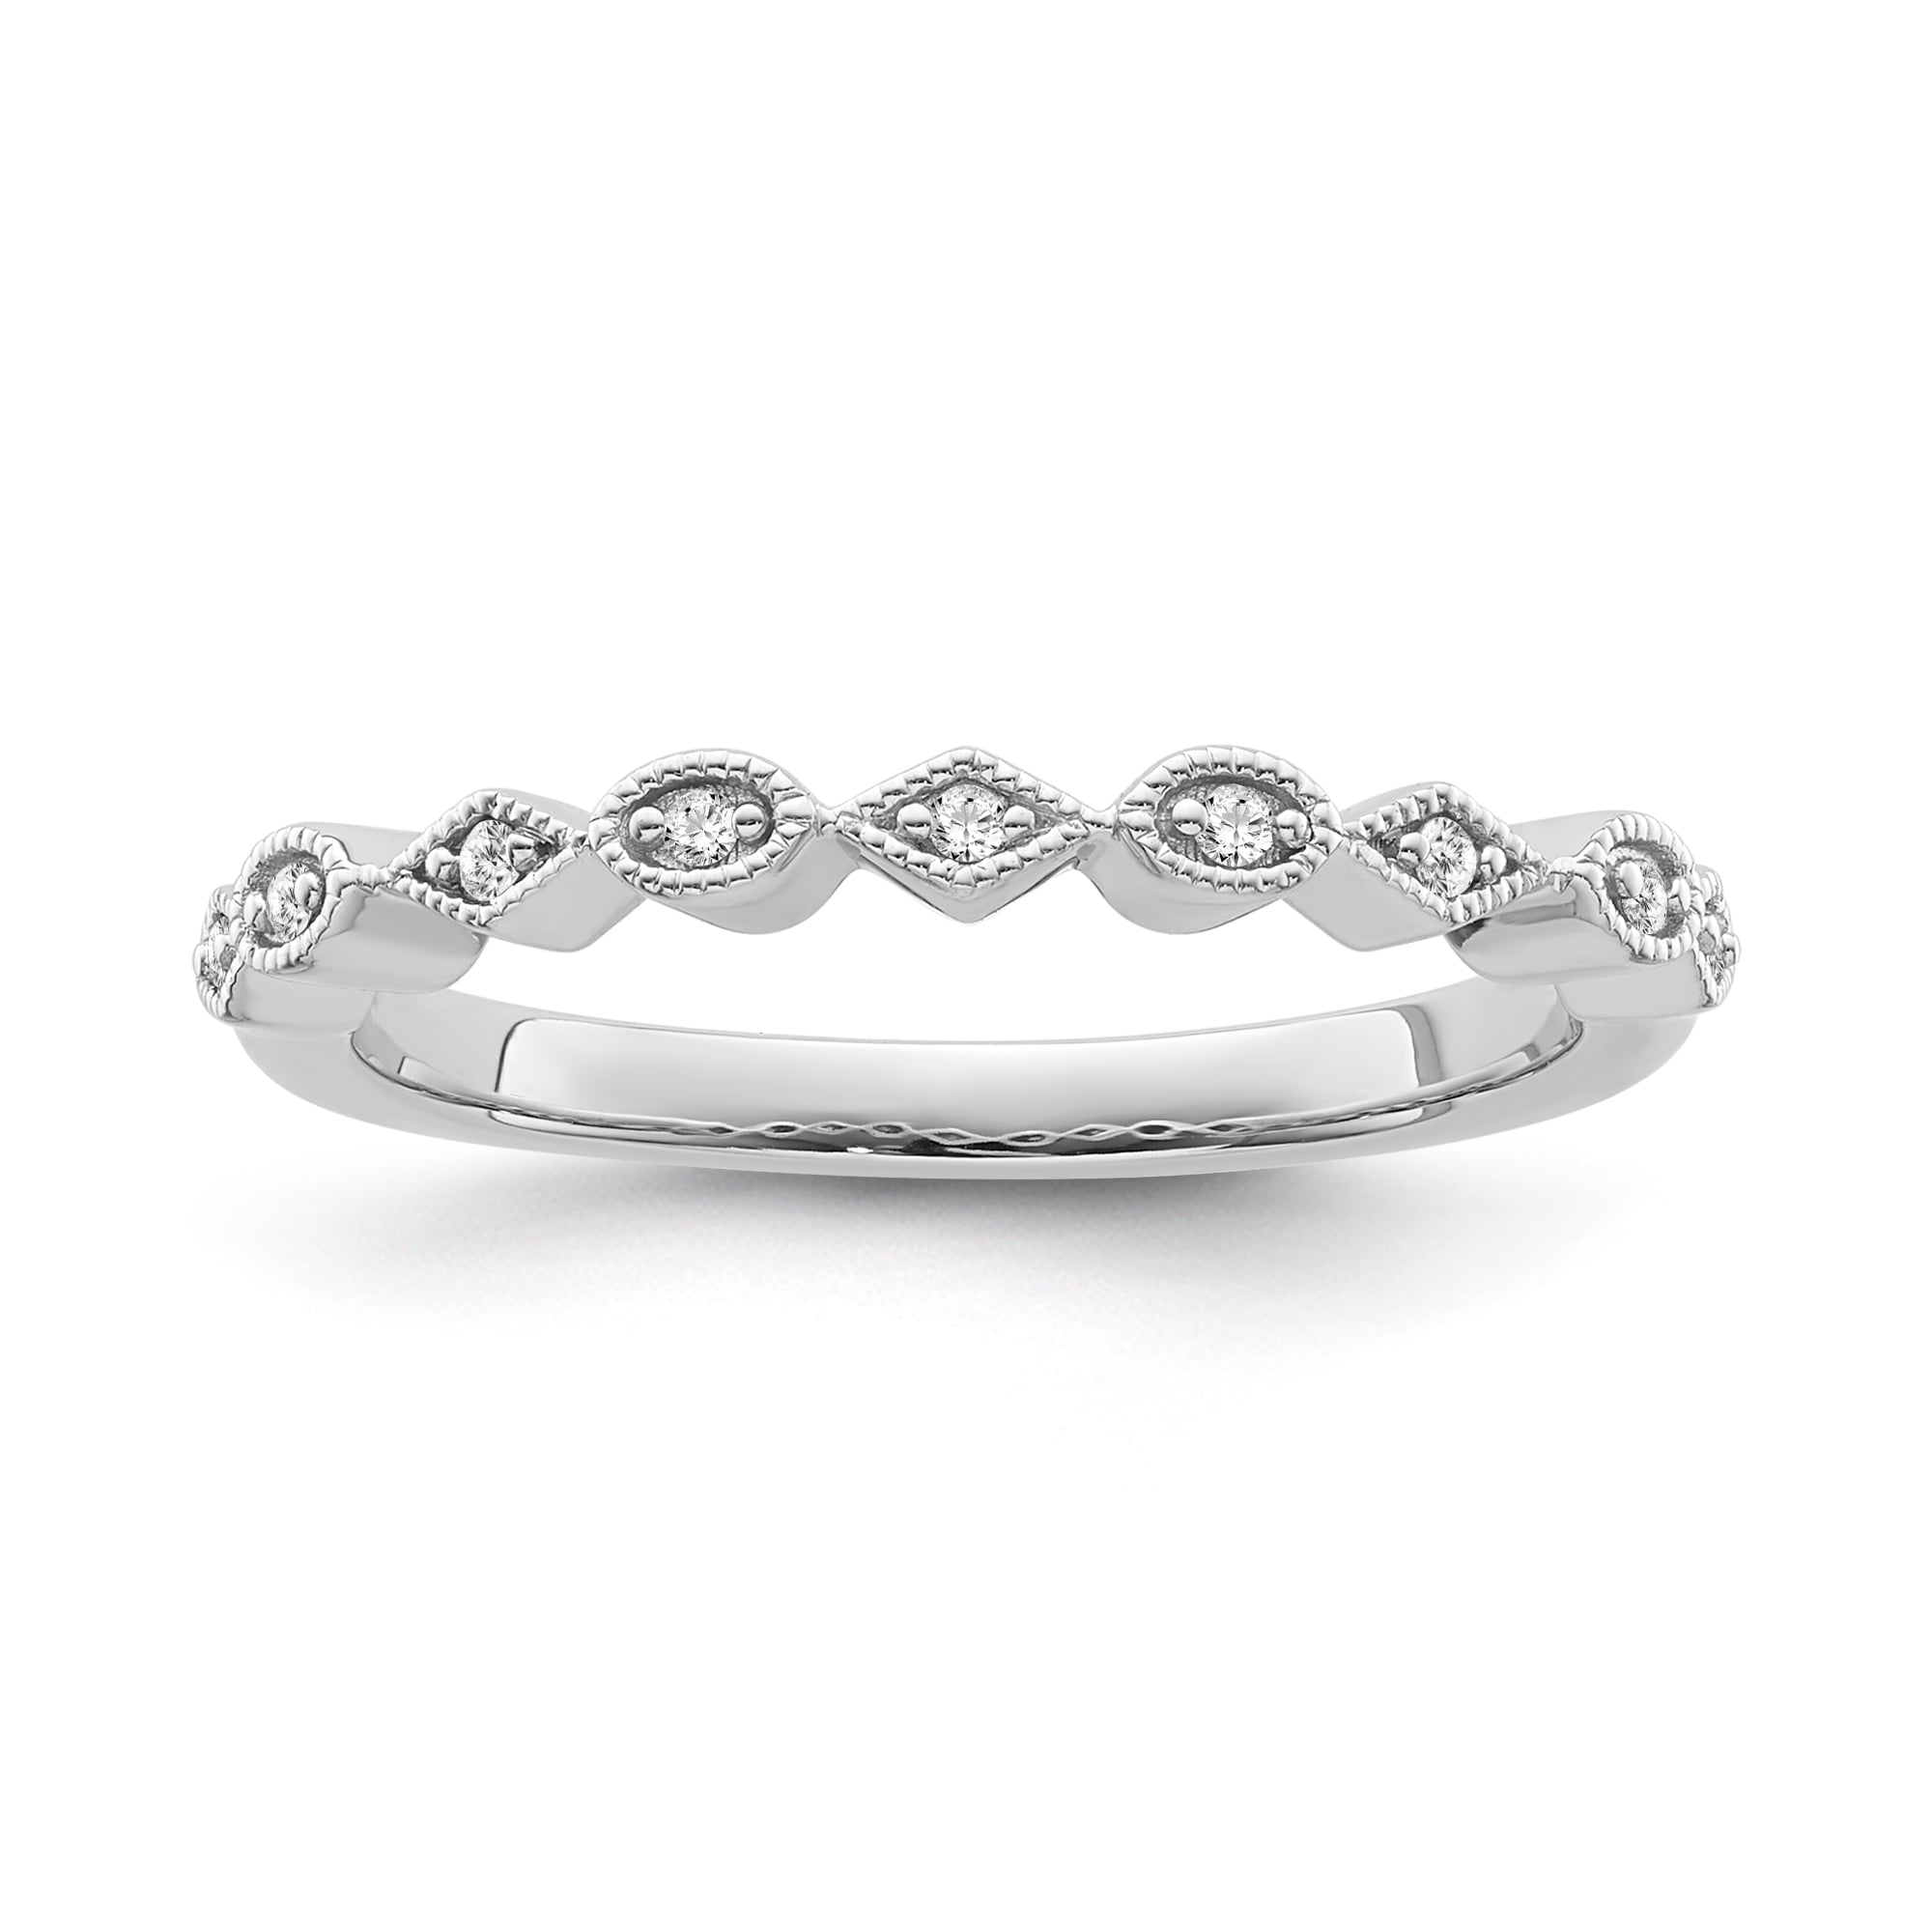 ARAIYA JEWELRY 10K White Gold Diamond Band Ring for Women (1/20 Cttw, I-J  Color, I2-I3 Clarity), Size 7